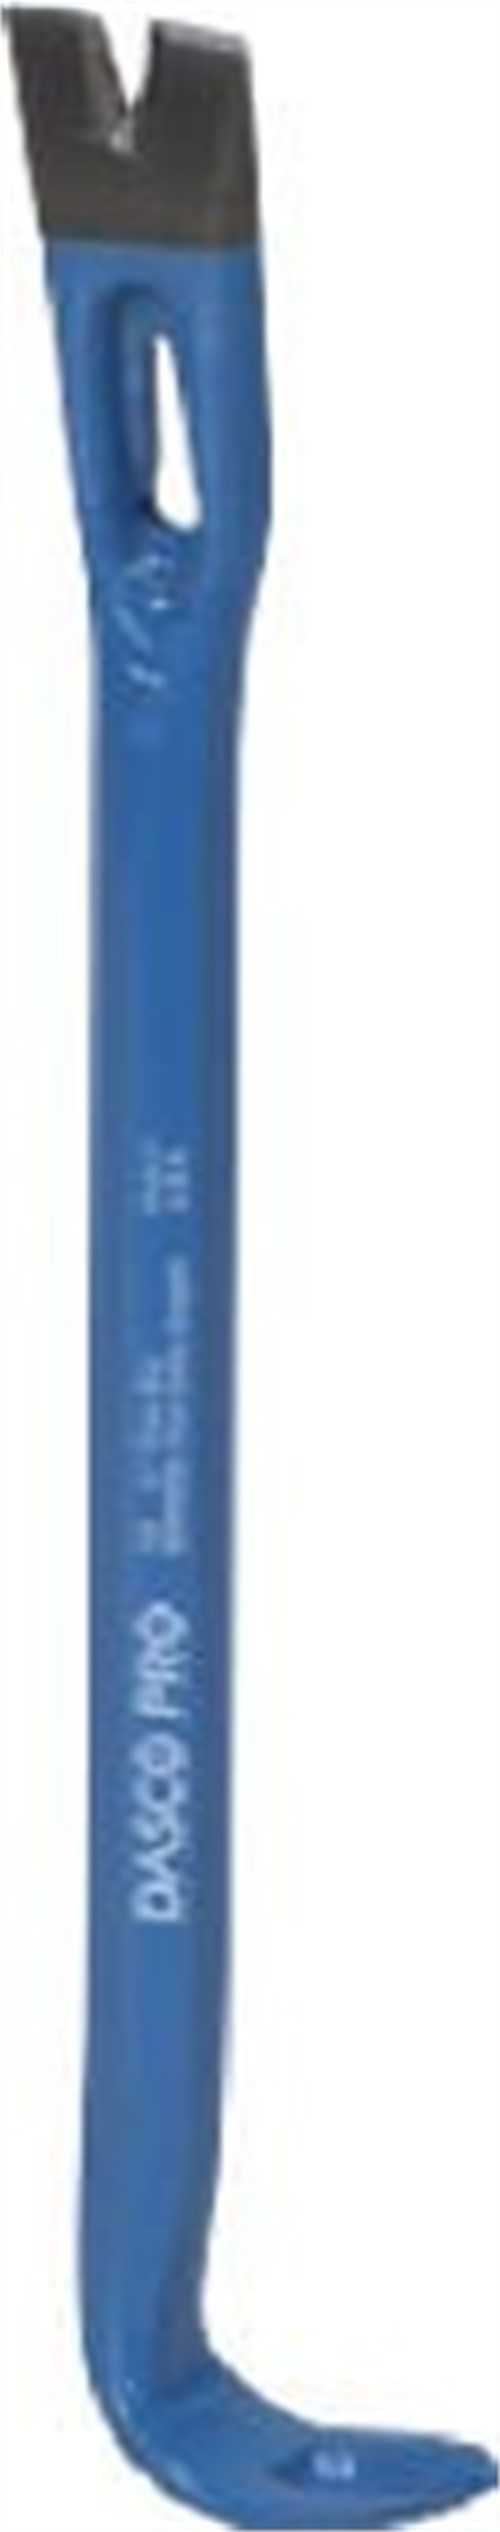 DASCO PRO 132 Nail Claw Bar,12 in. OAL,Blue G1917609